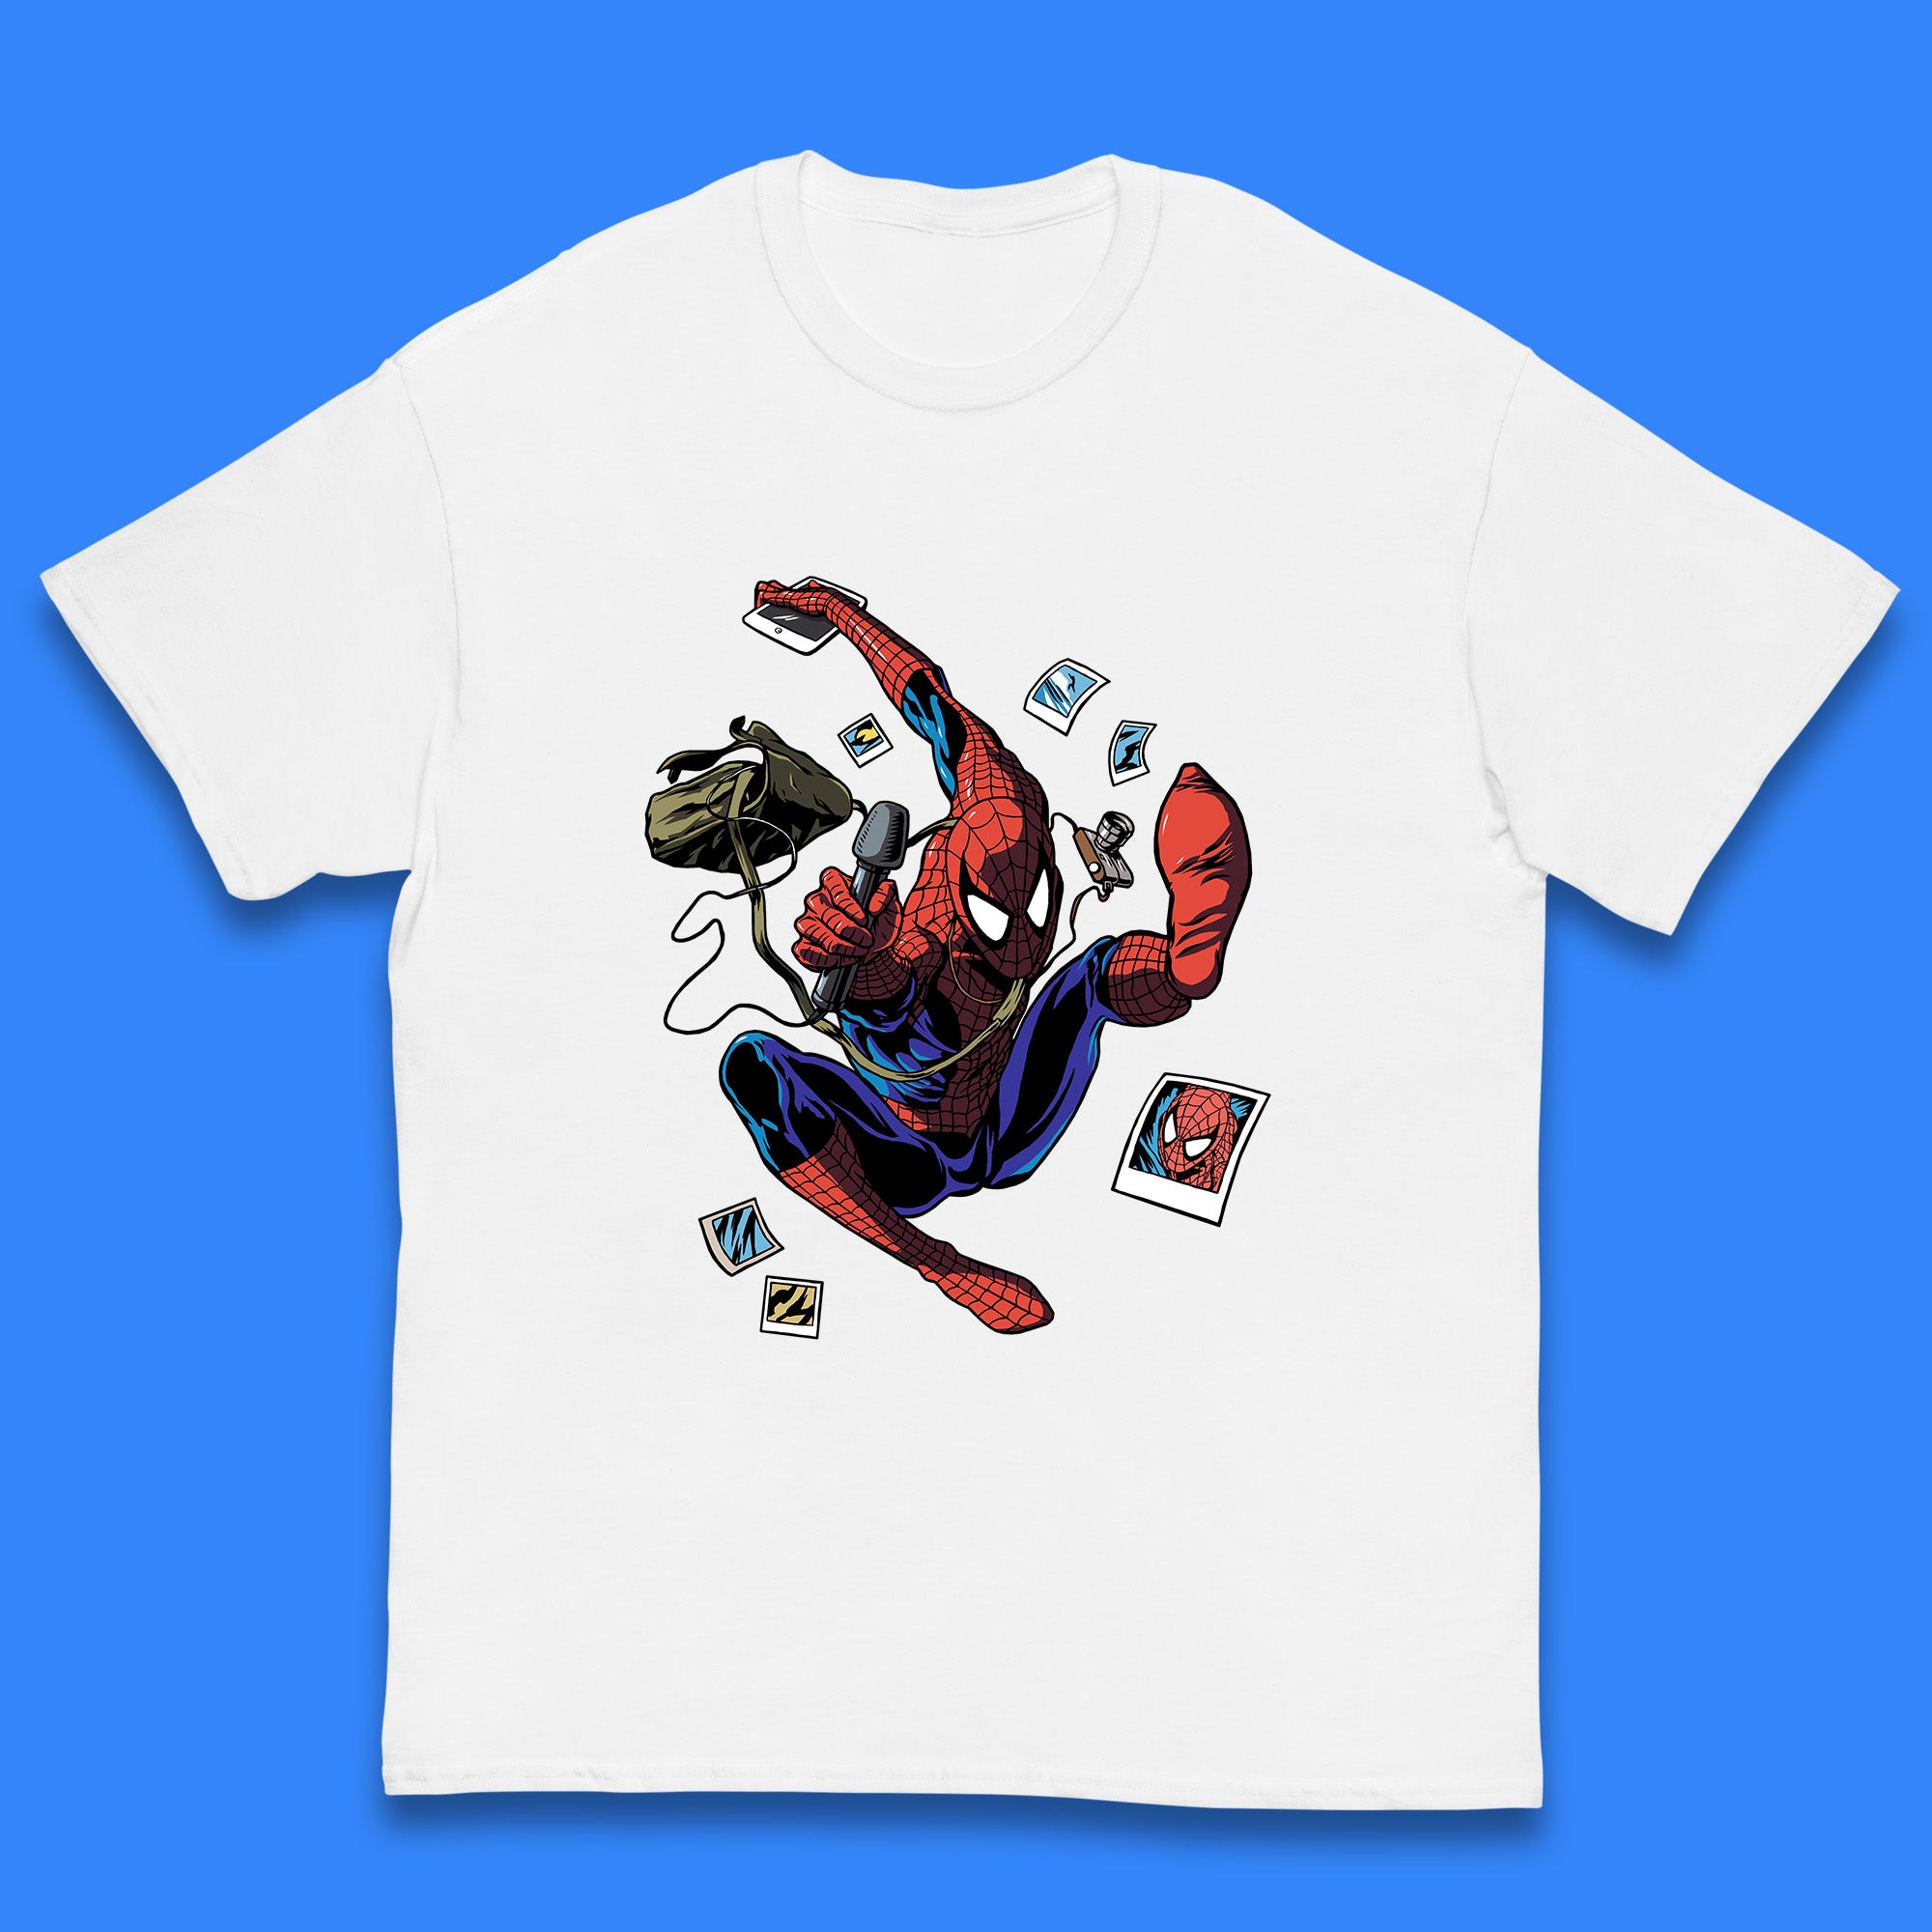 Spider-Man The Animated Series American Superhero Marvel Comics Action Adventure Science Fiction Kids T Shirt